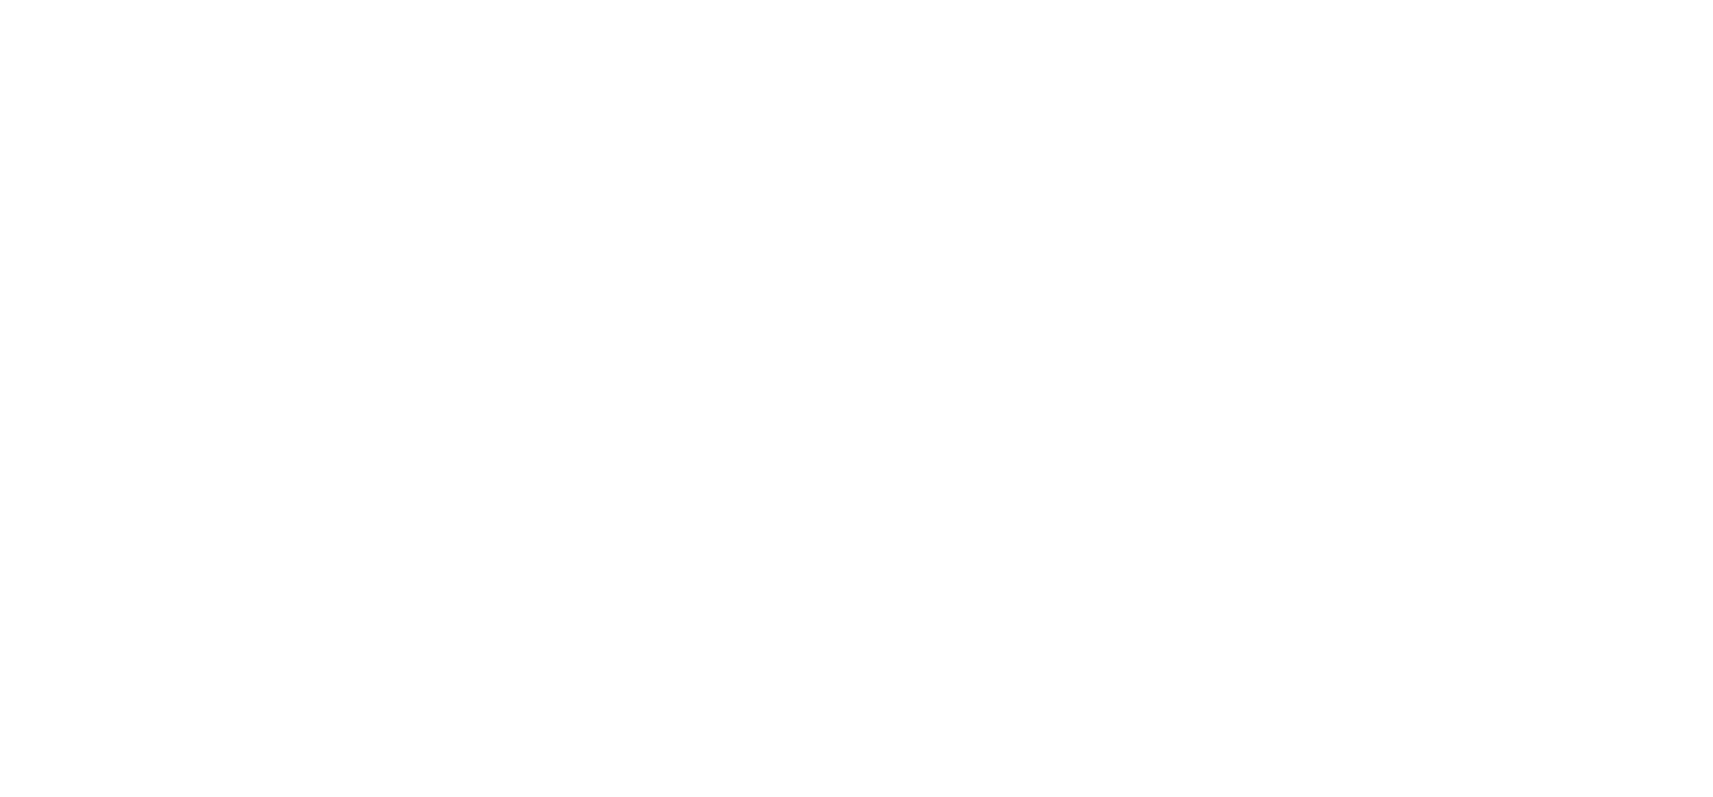 Chamberlain's Coffee & Cakes Logo